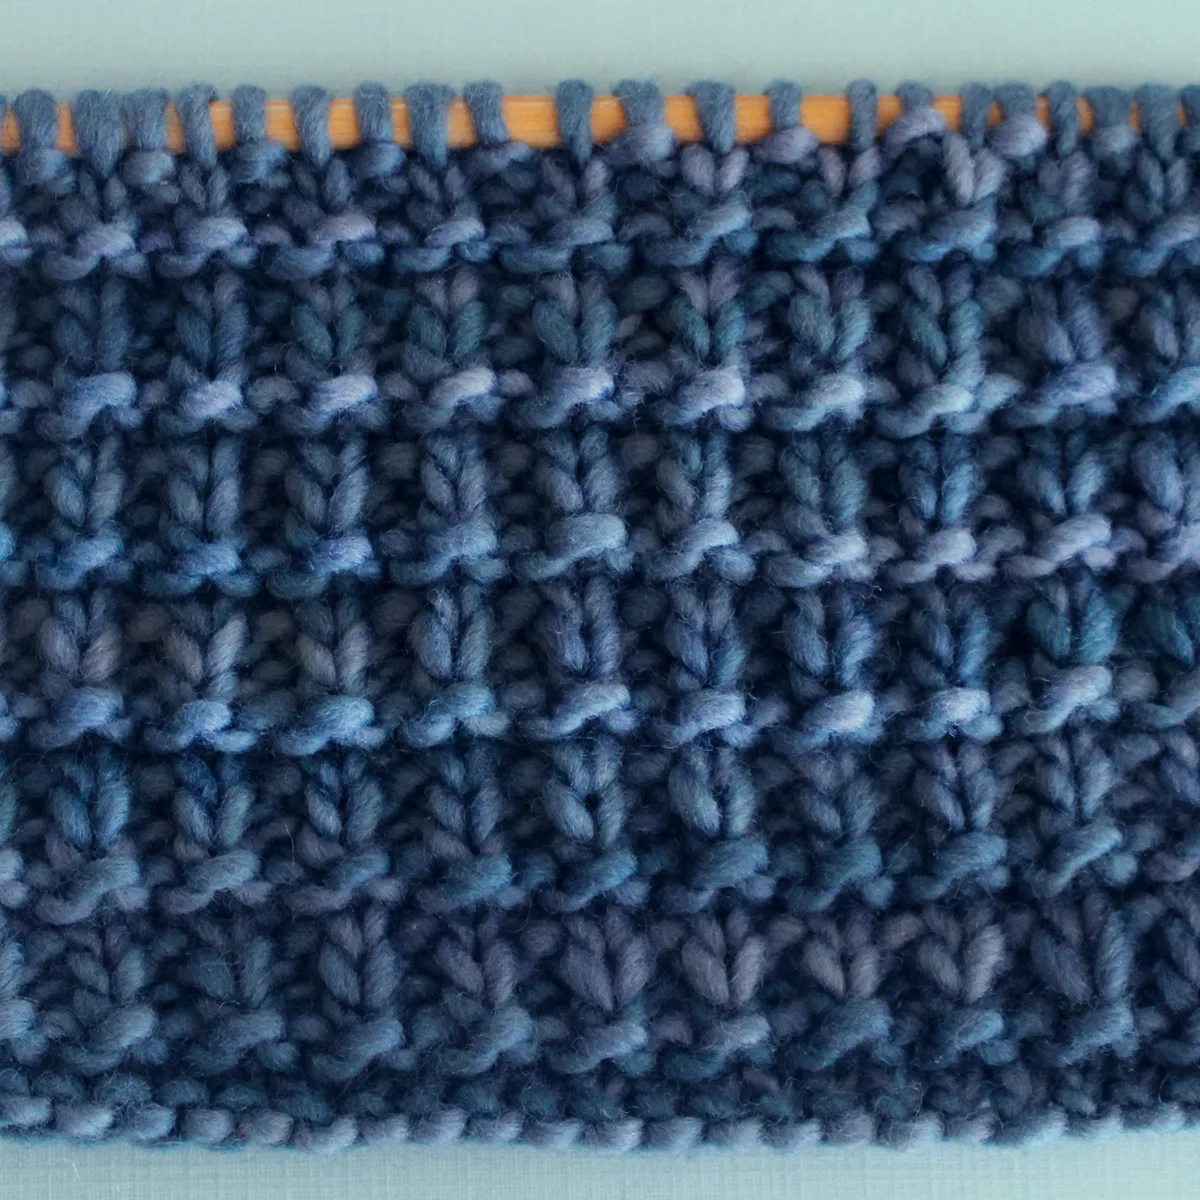 Hurdle Basket Weave Stitch Knitting Pattern in blue yarn color on knitting needle.